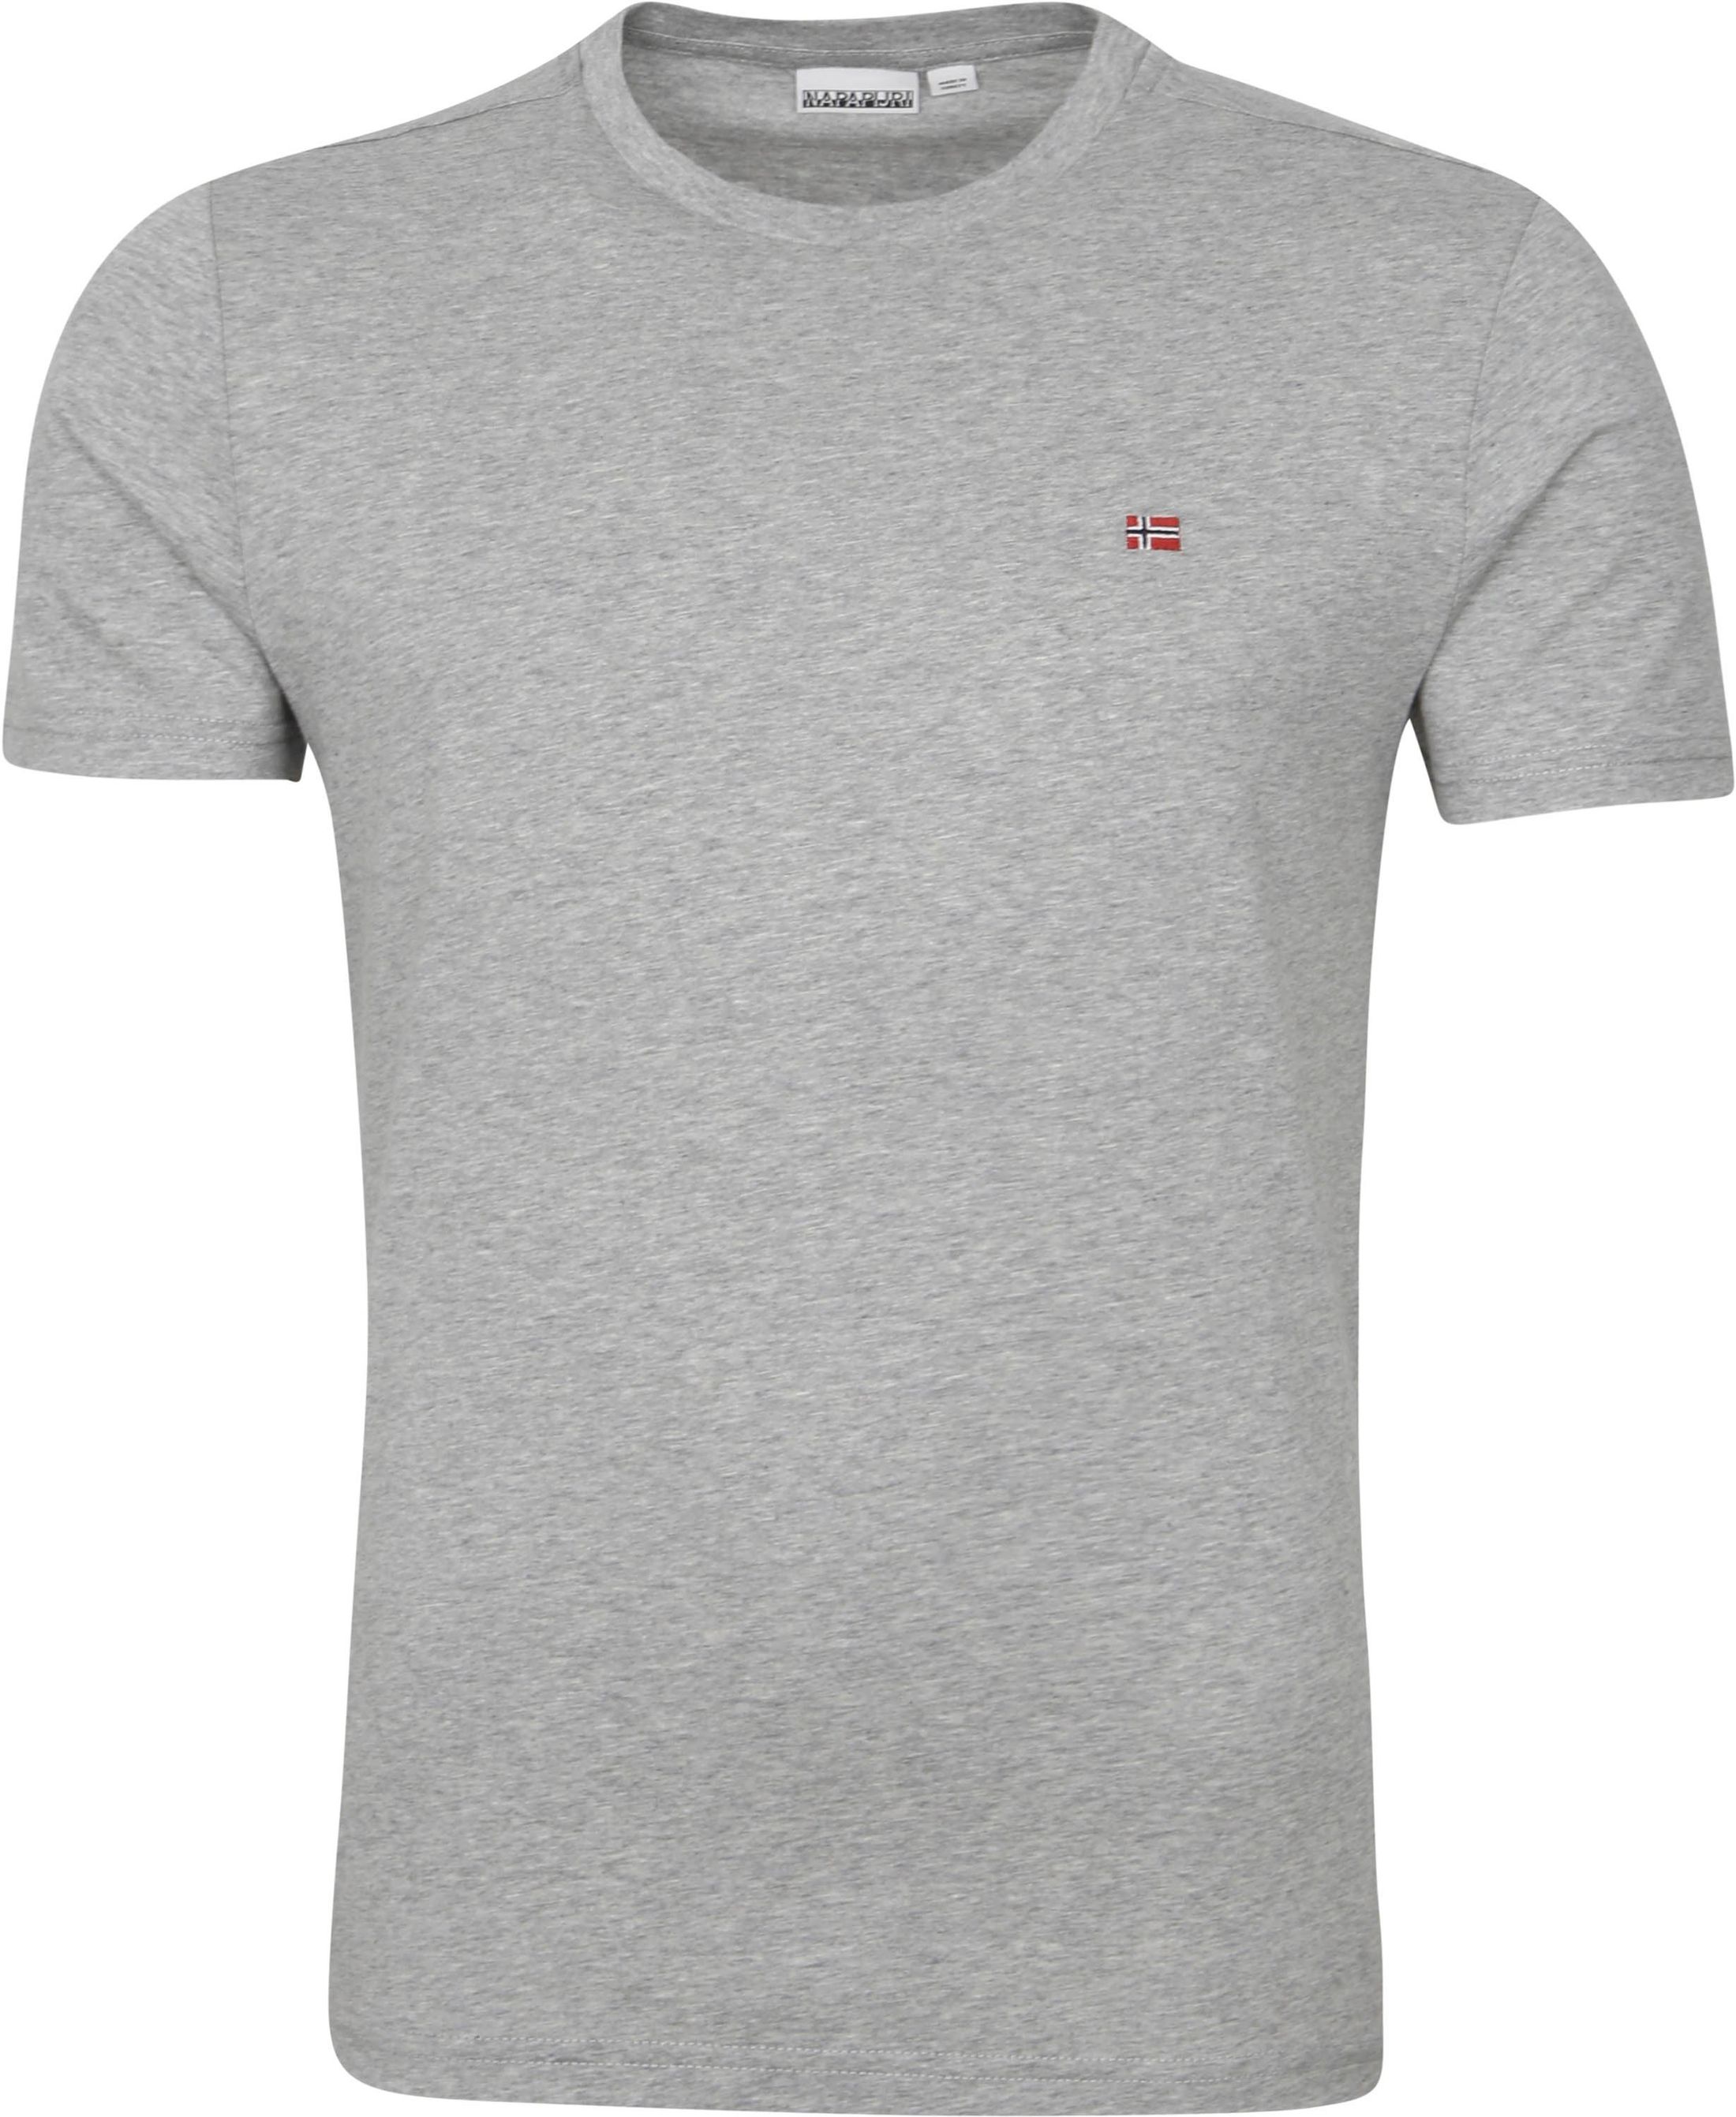 Napapijri Salis T Shirt Grey size XXL